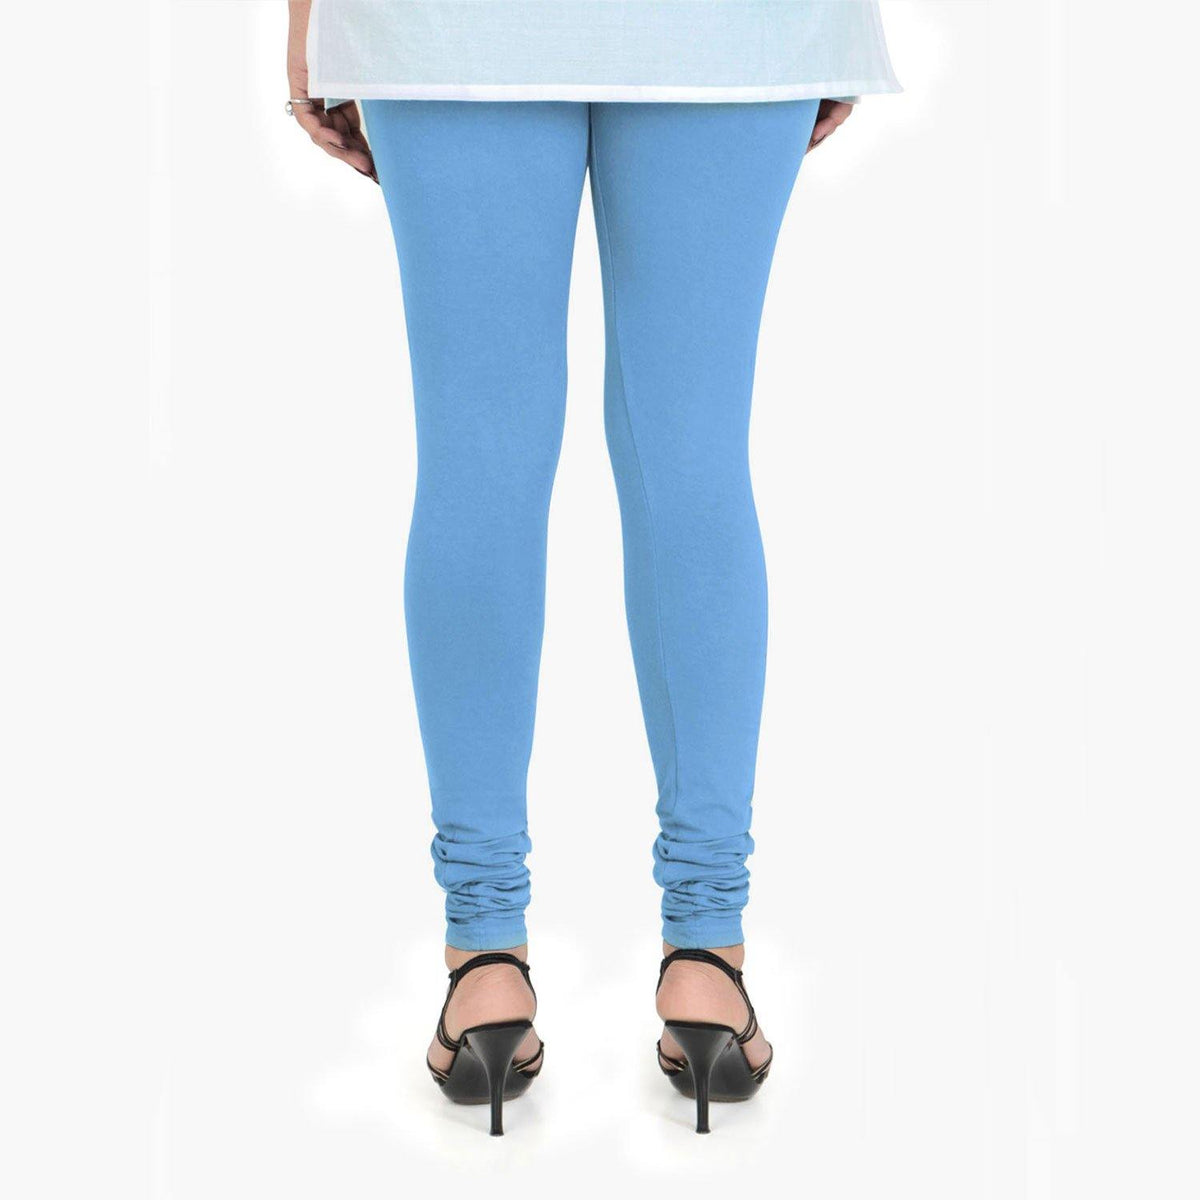 Vami Women's Cotton Stretchable Churidar Legging - Ocean Blue